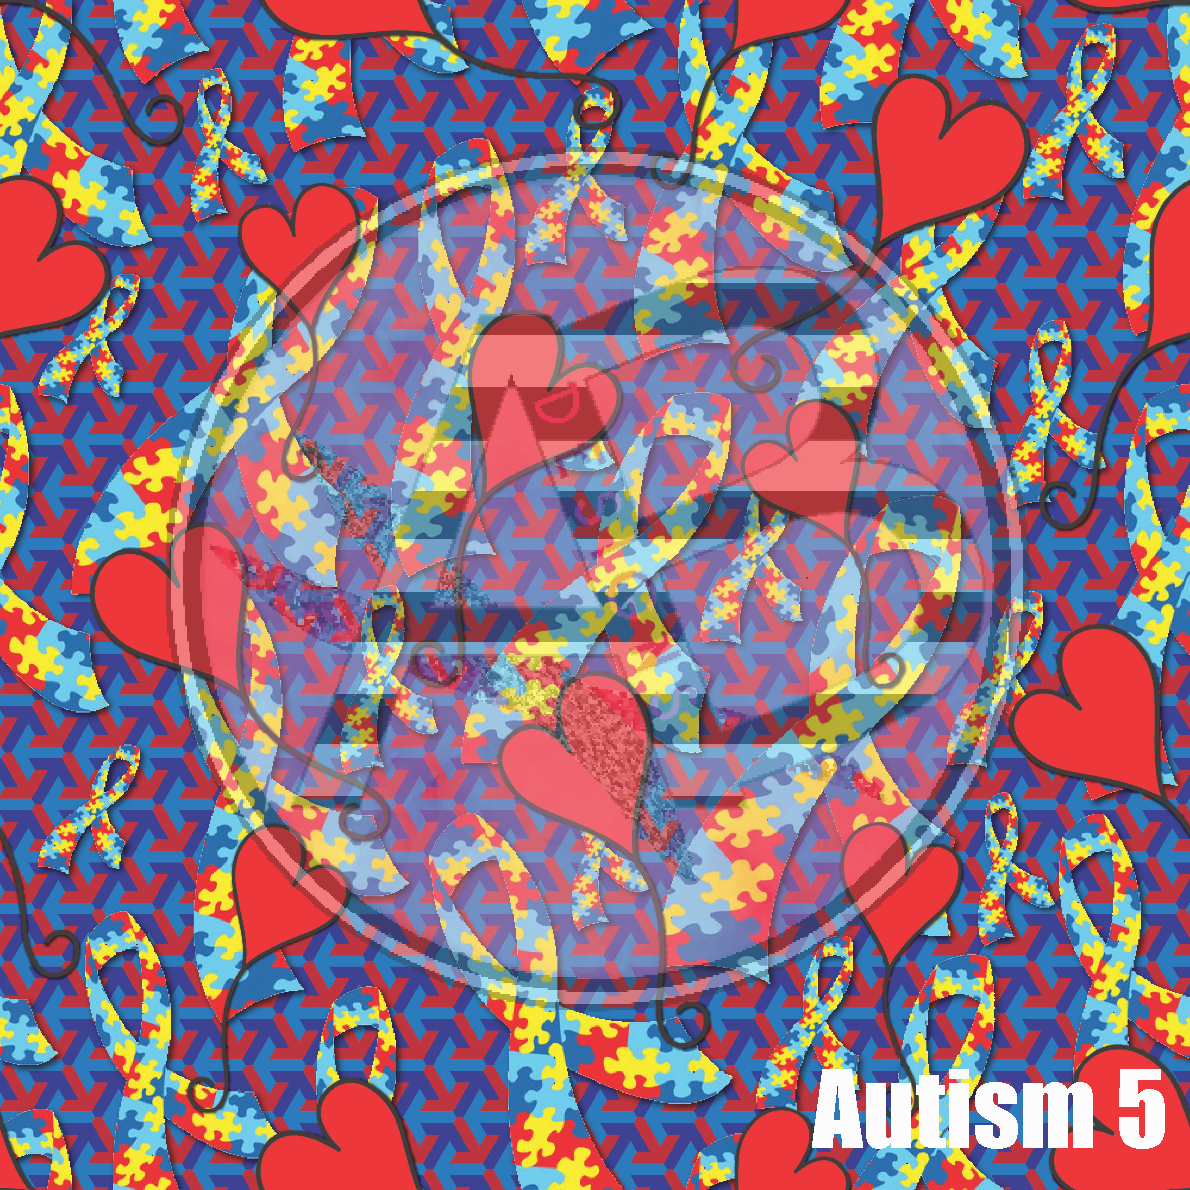 Adhesive Patterned Vinyl - Autism 5